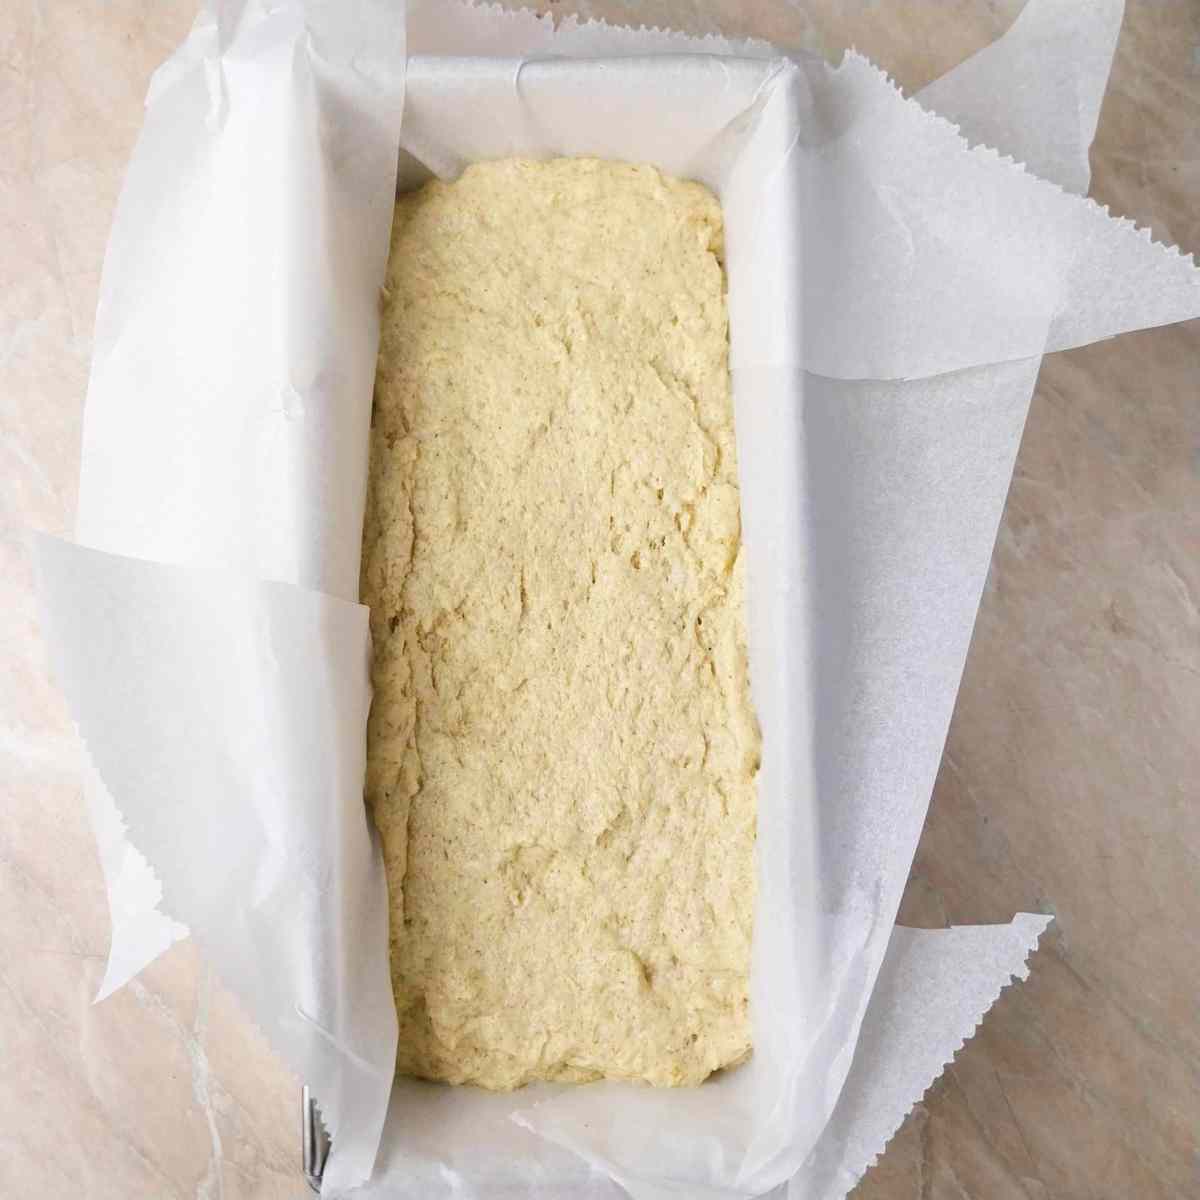 Millet dough in a lined baking bread pan.